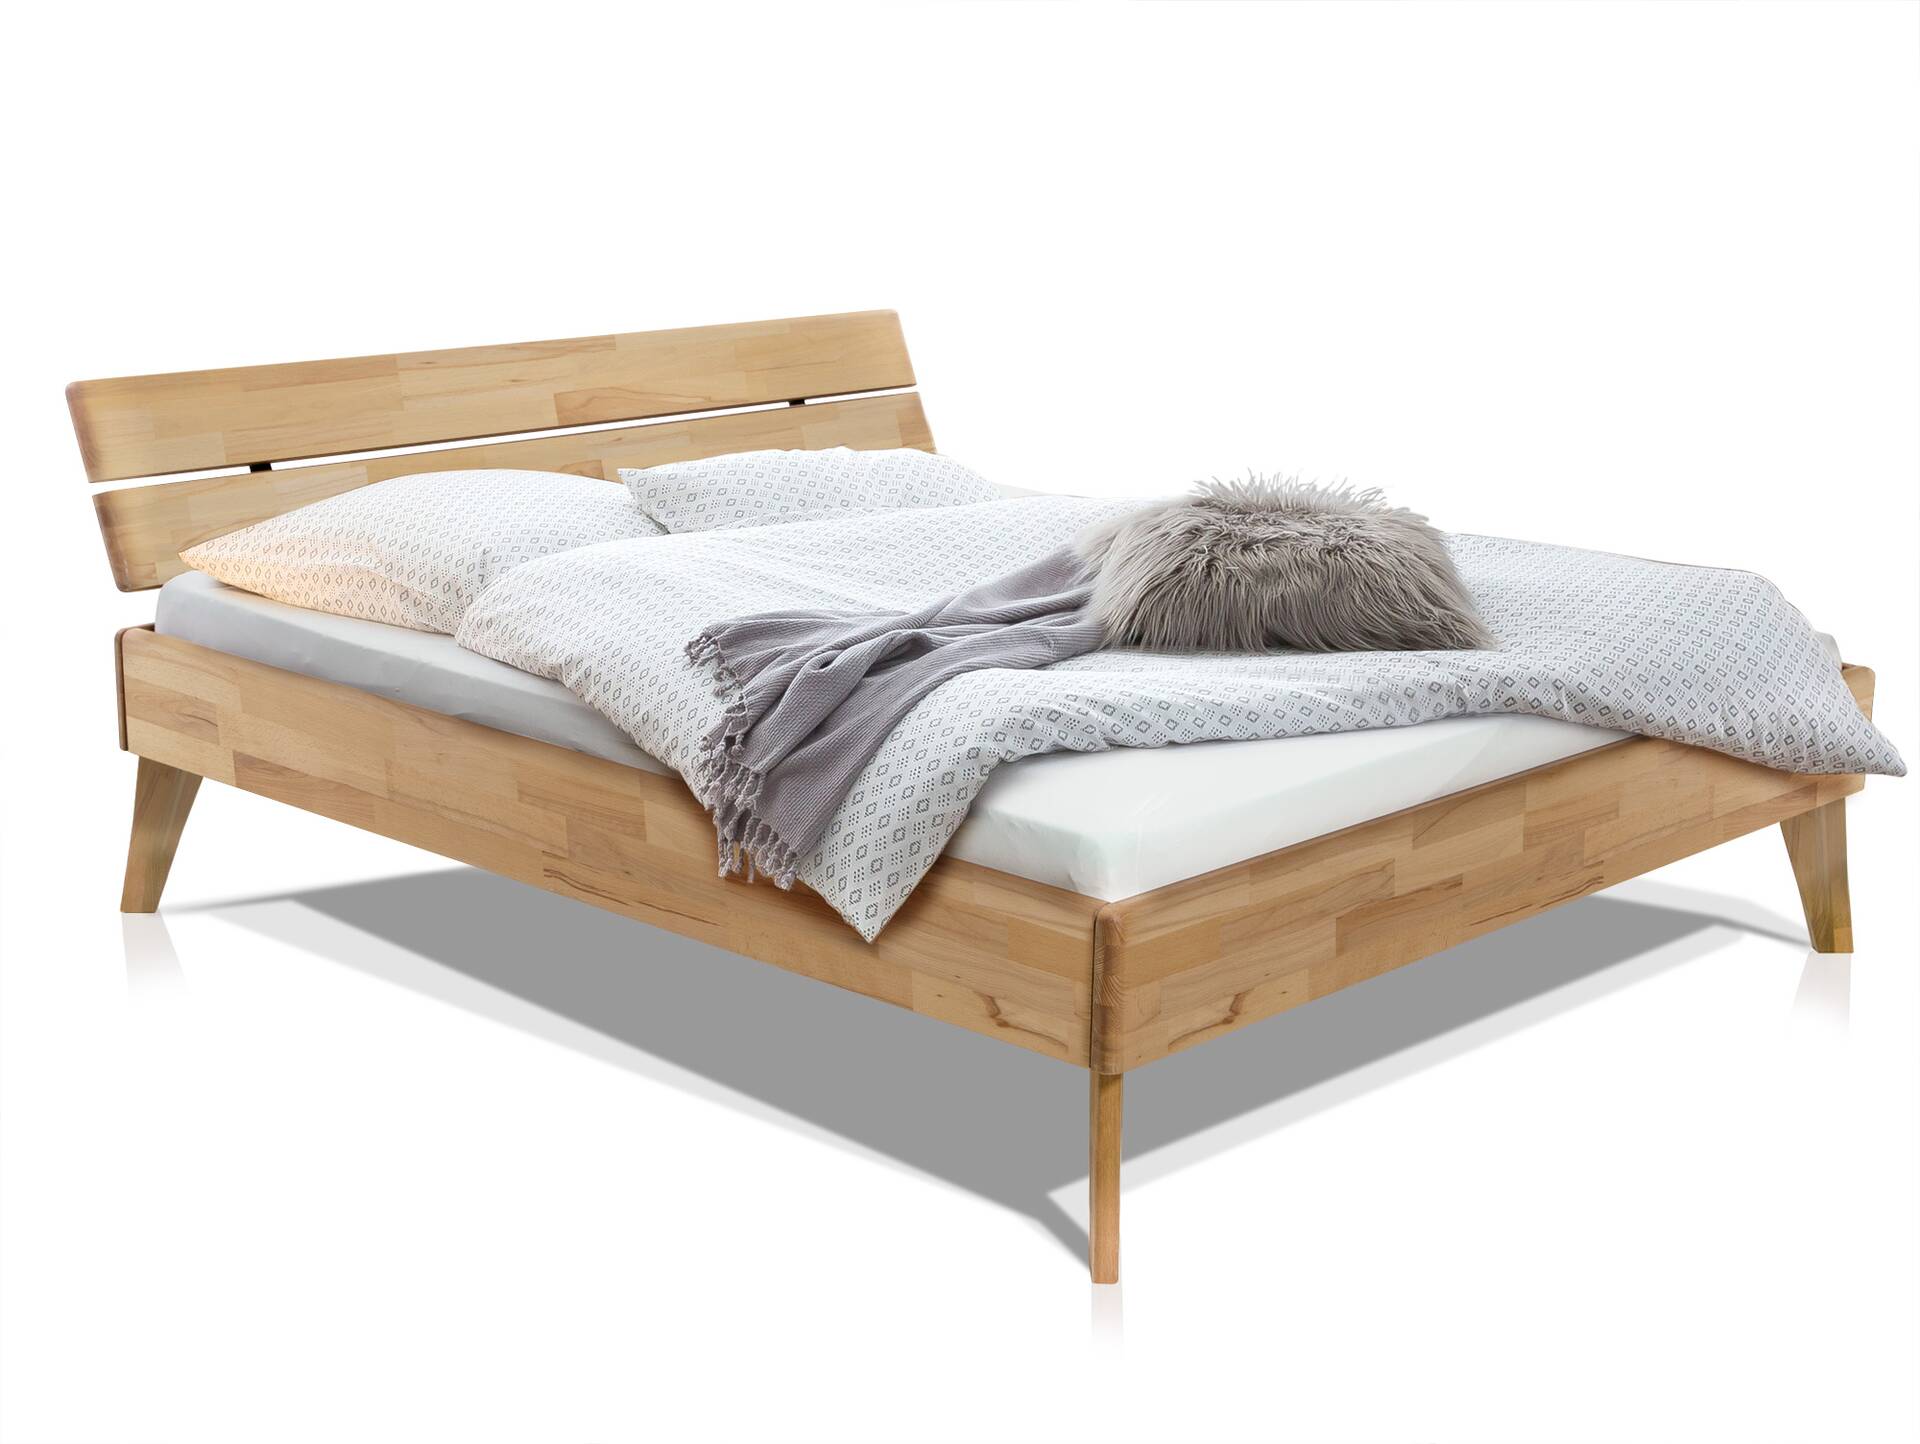 CALIDO 4-Fuß-Bett mit Kopfteil, Material Massivholz 180 x 200 cm | Eiche geölt | Komforthöhe